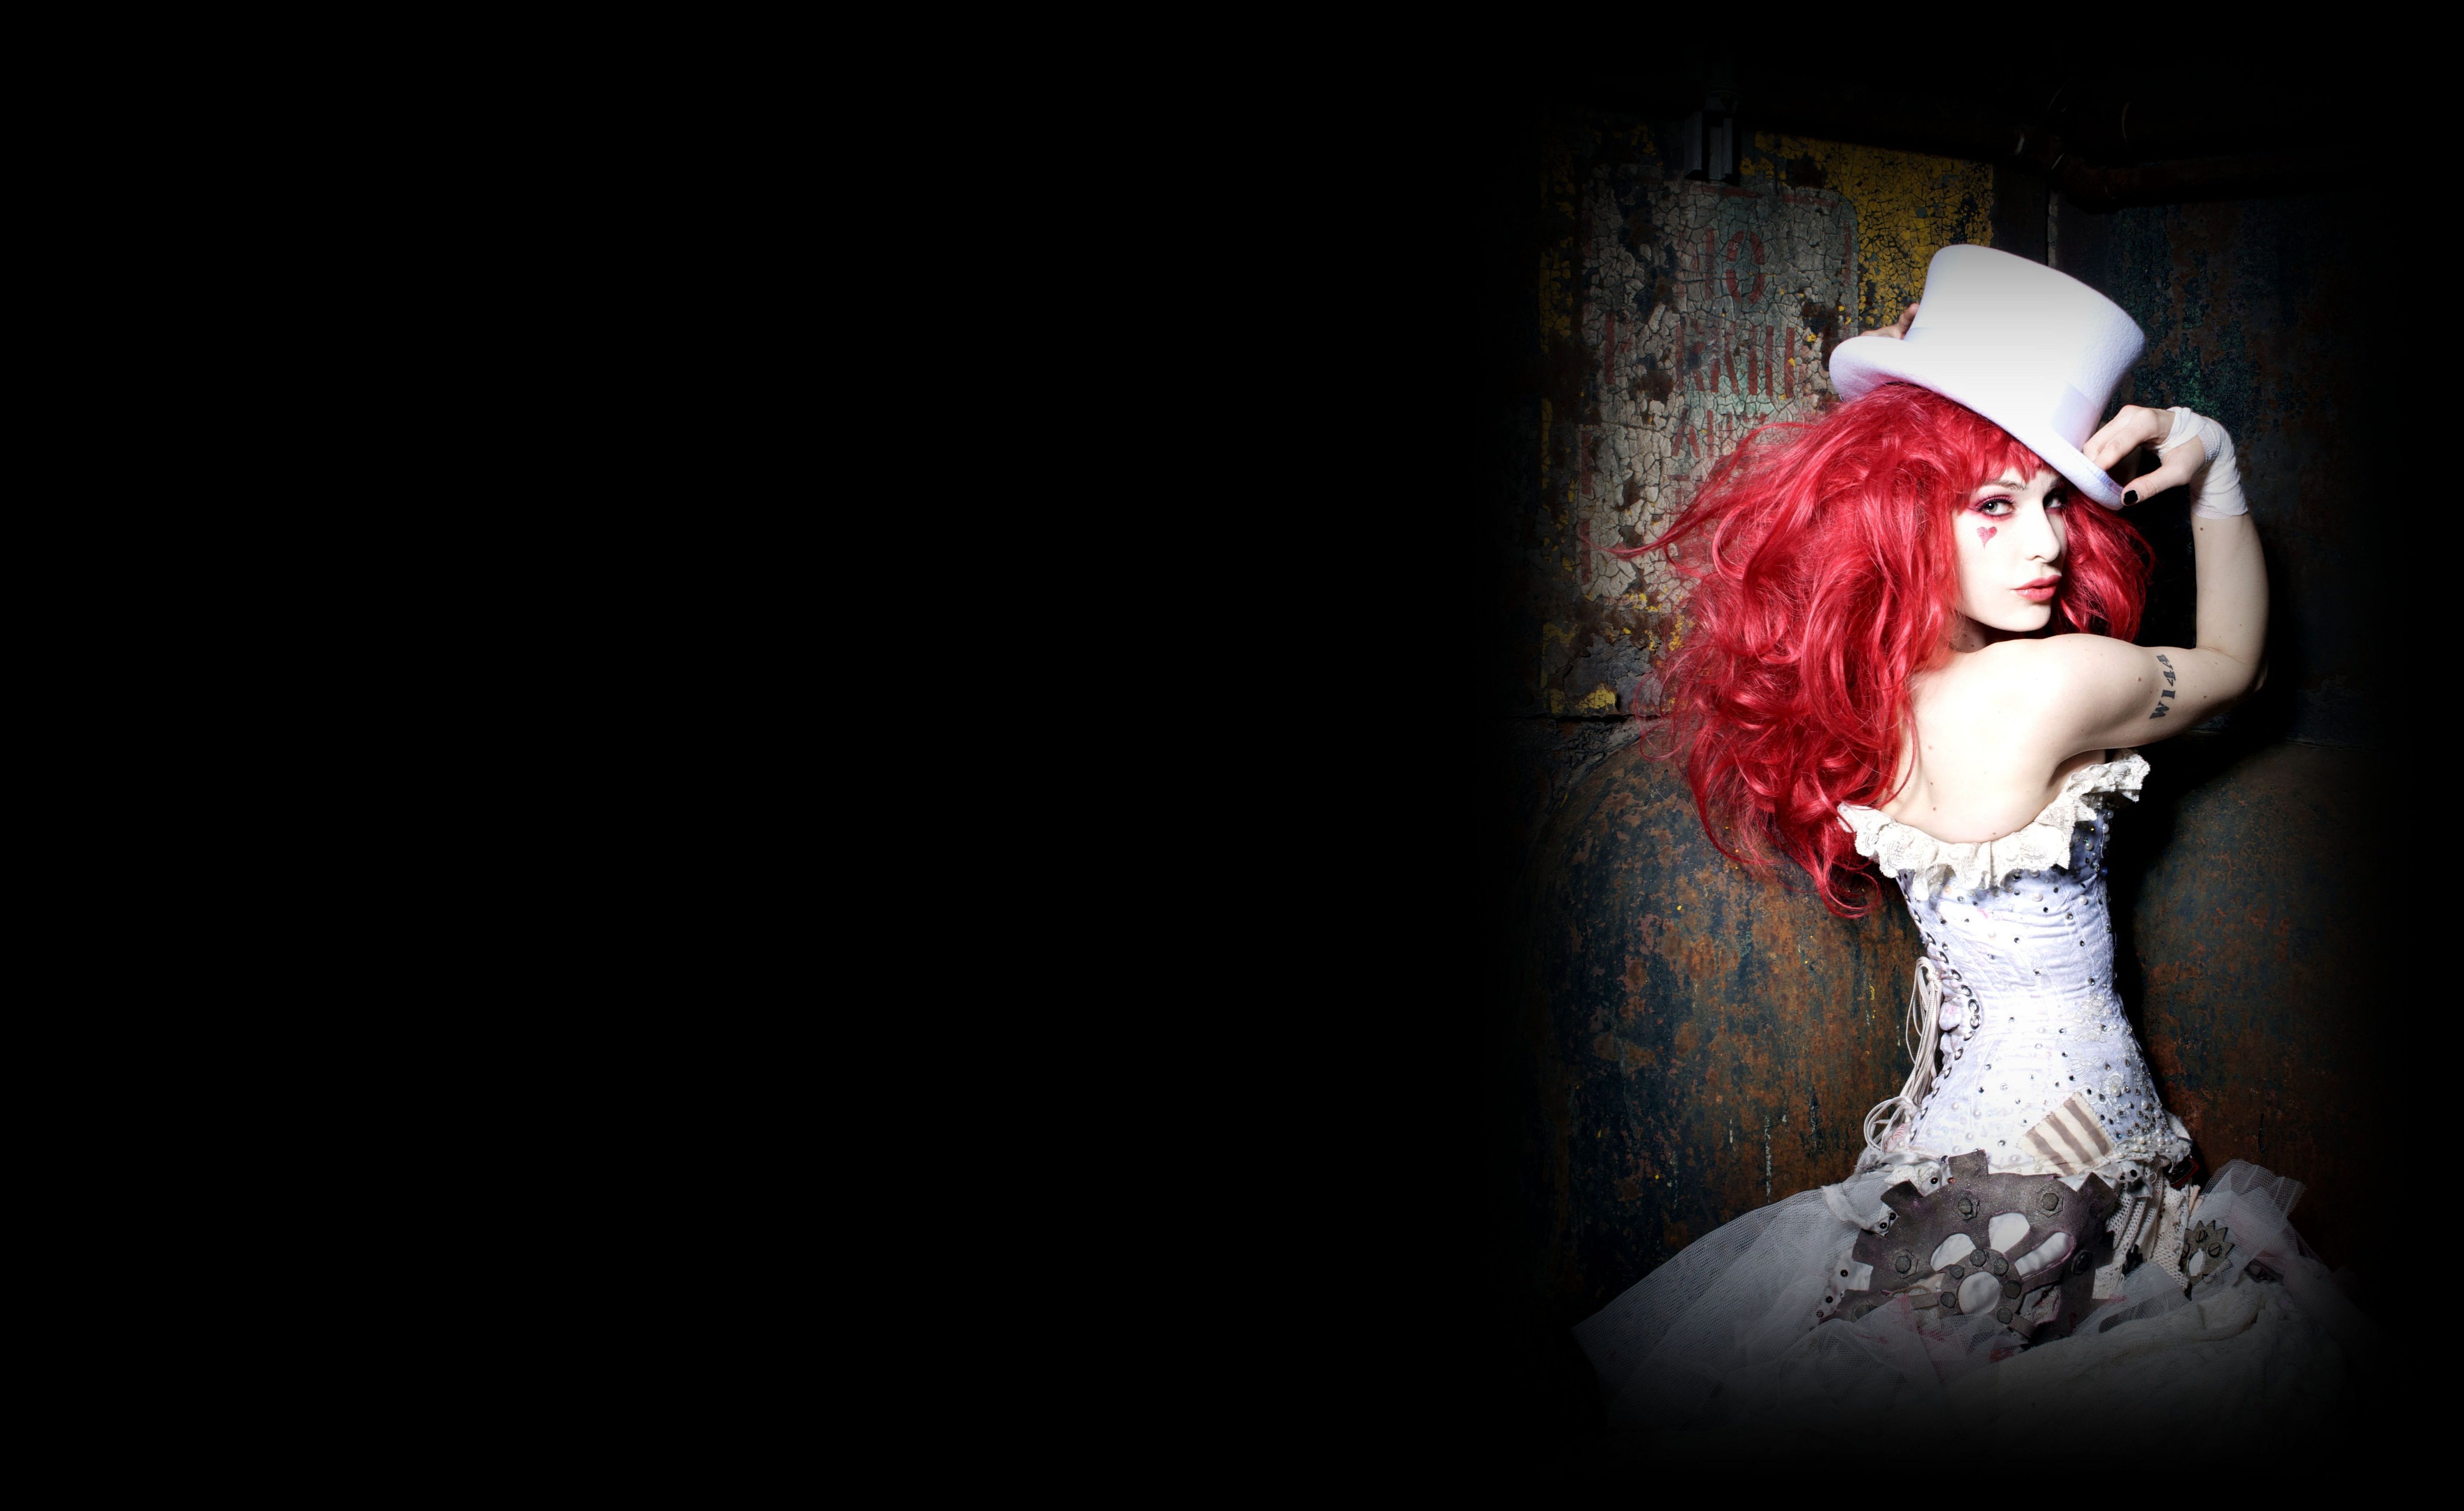 Emilie Autumn Wallpapers Backgrounds 5500x3372